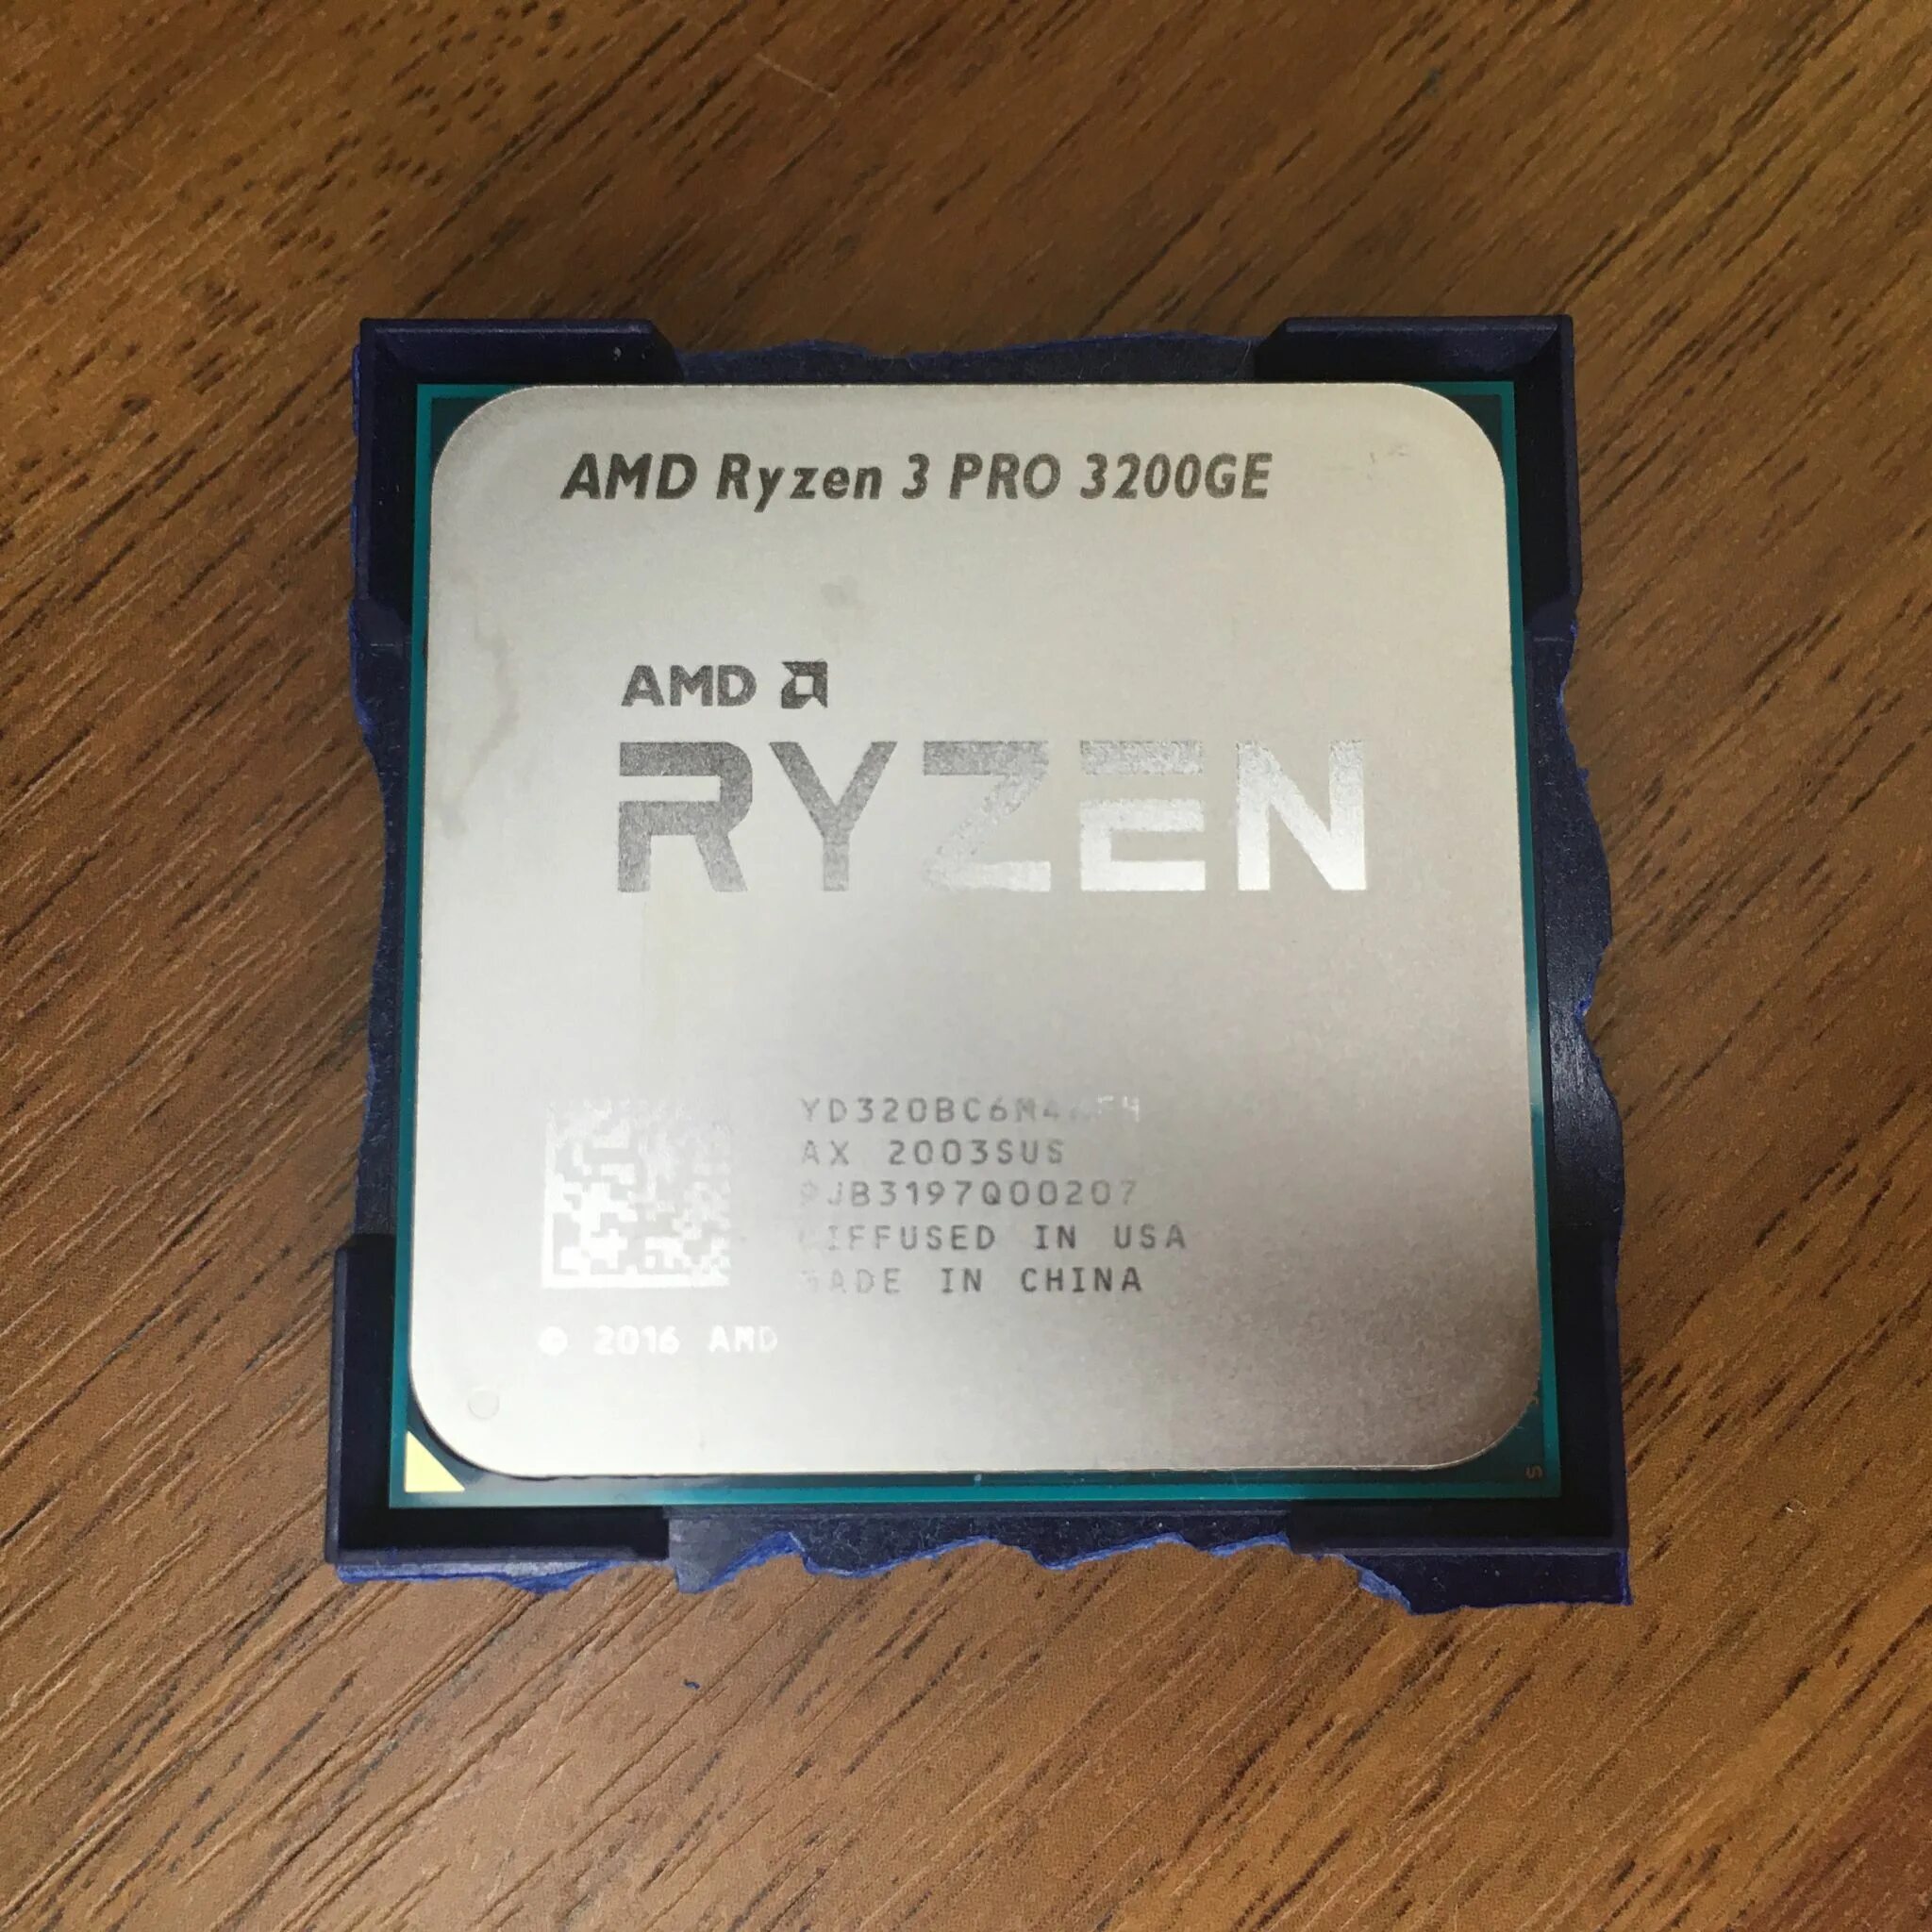 AMD Ryzen 3 Pro 3200g. Процессор Ryzen 3 Pro 1200. AMD Ryzen 3 Pro 3200ge w/ Radeon Vega Graphics \. AMD Ryzen 3 Pro 3200g am4, 4 x 3600 МГЦ. 3 pro 3200g